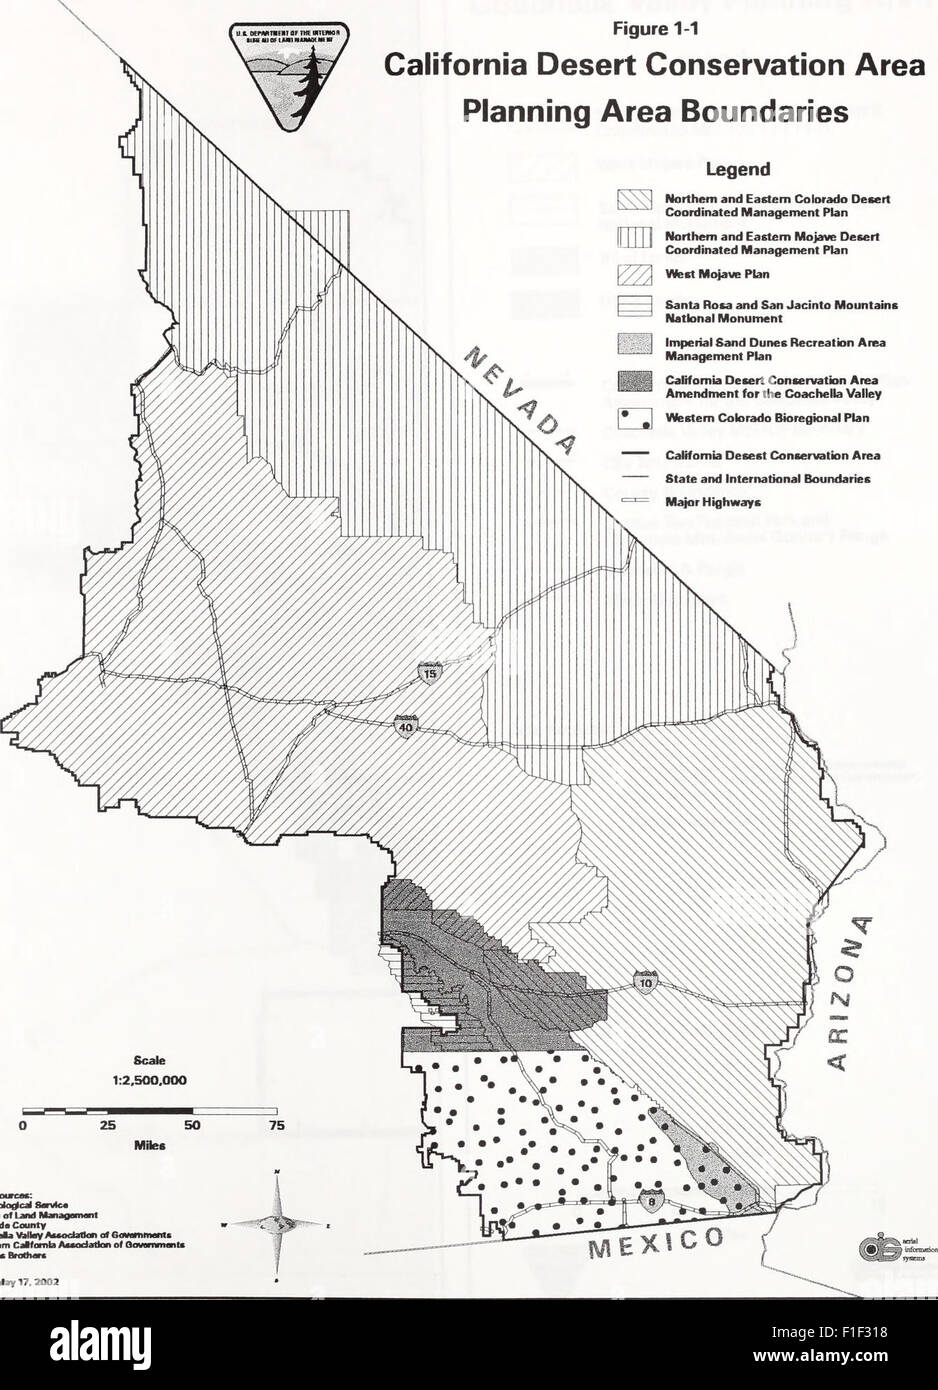 Draft California desert conservation area plan amendment for the Coachella Valley, Draft Santa Rosa and San Jacinto Mountains Trails management plan, and Draft environmental impact statement. (2002) Stock Photo